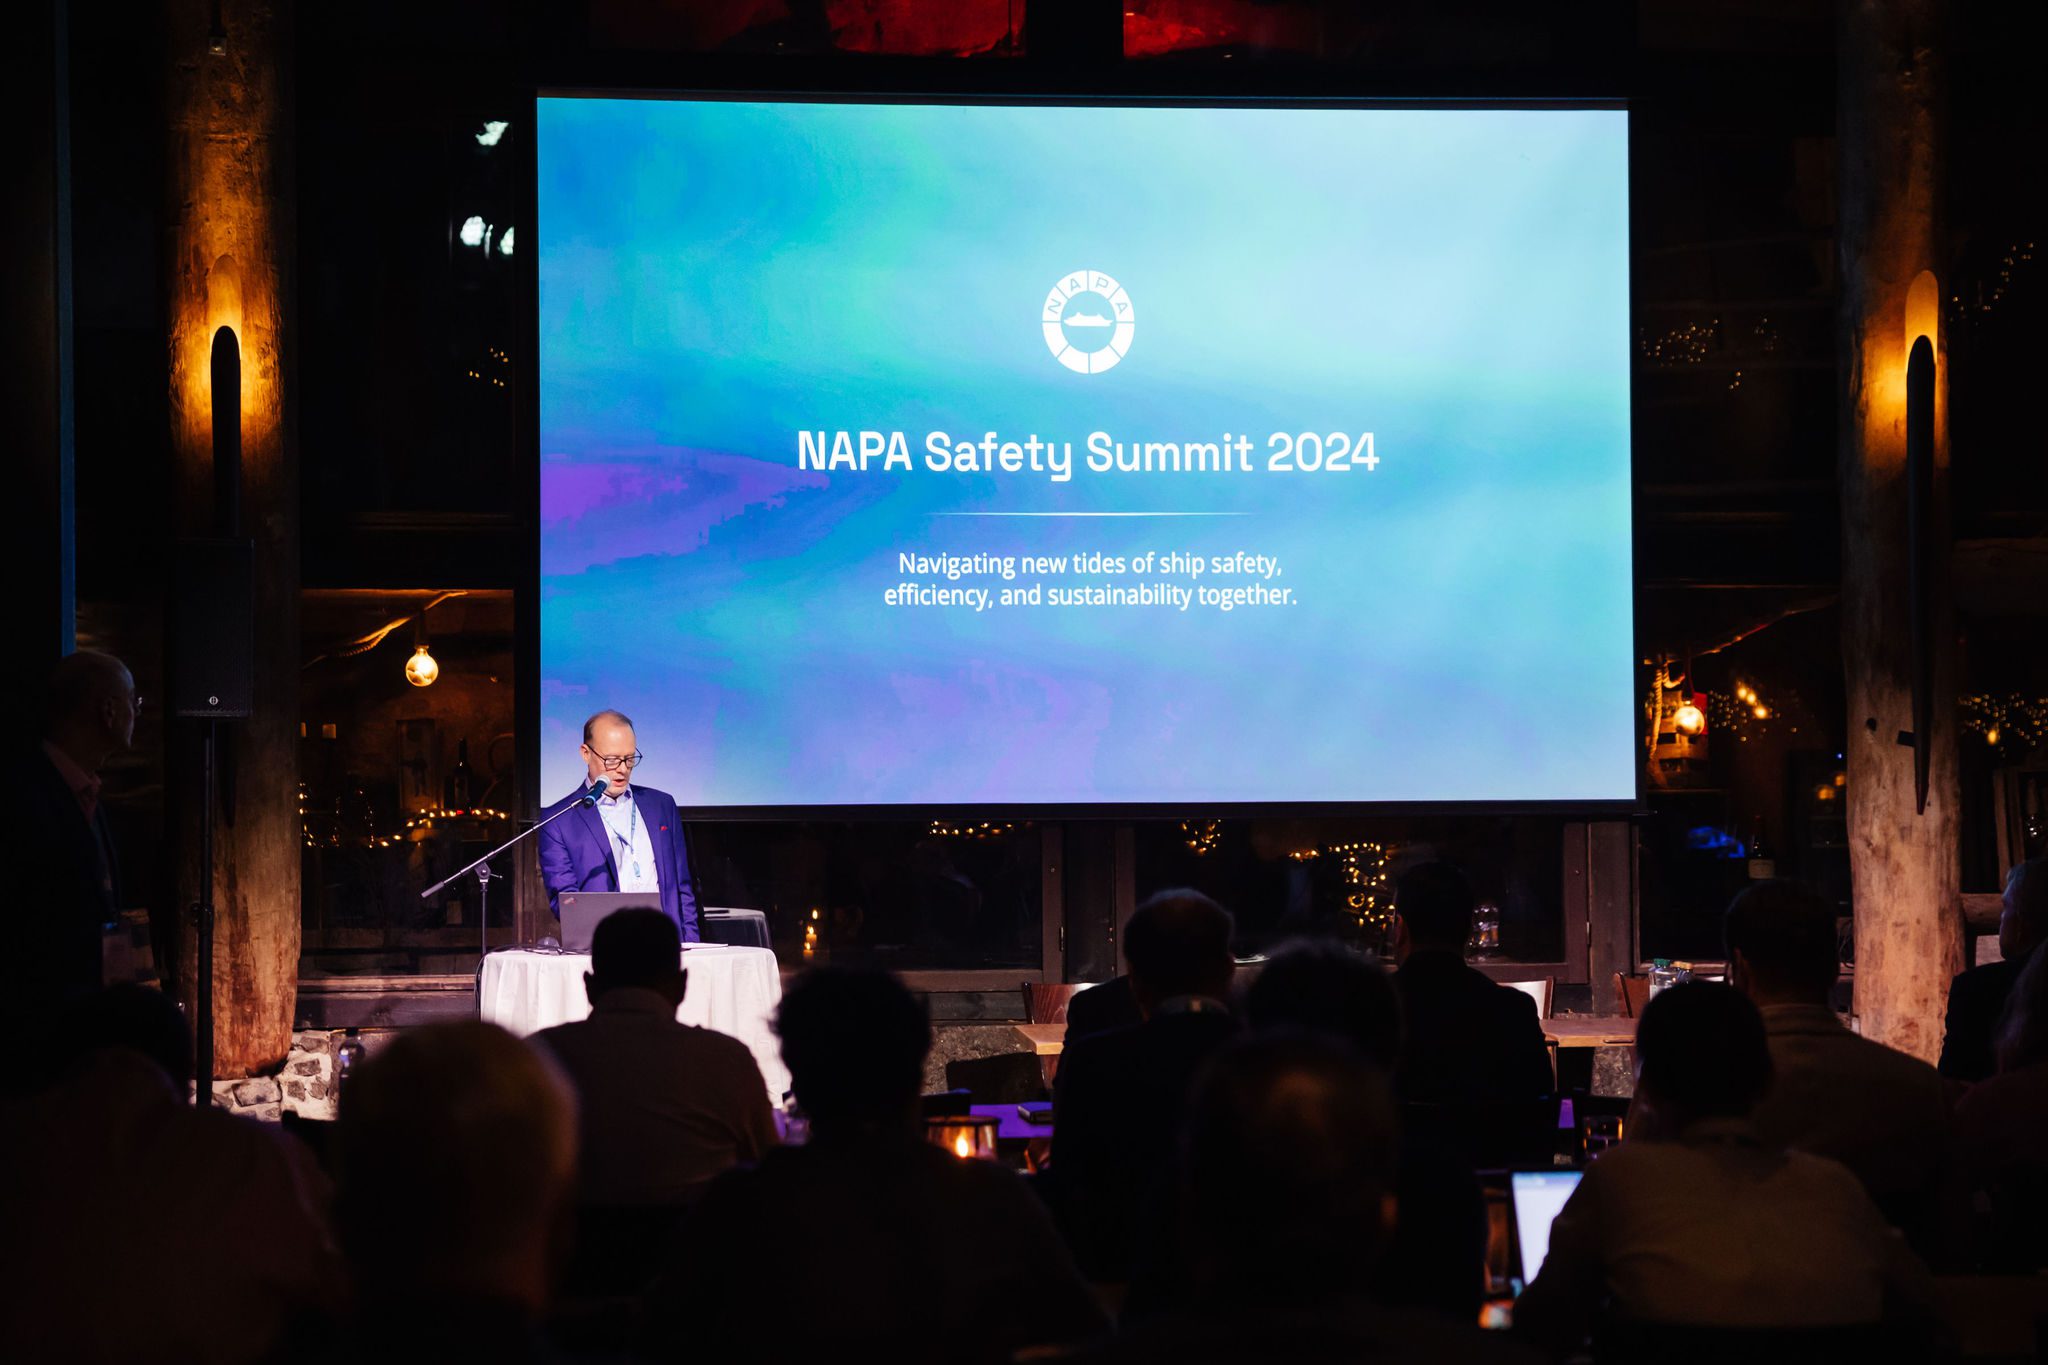 NAPA Safety Summit 2024 Press Note